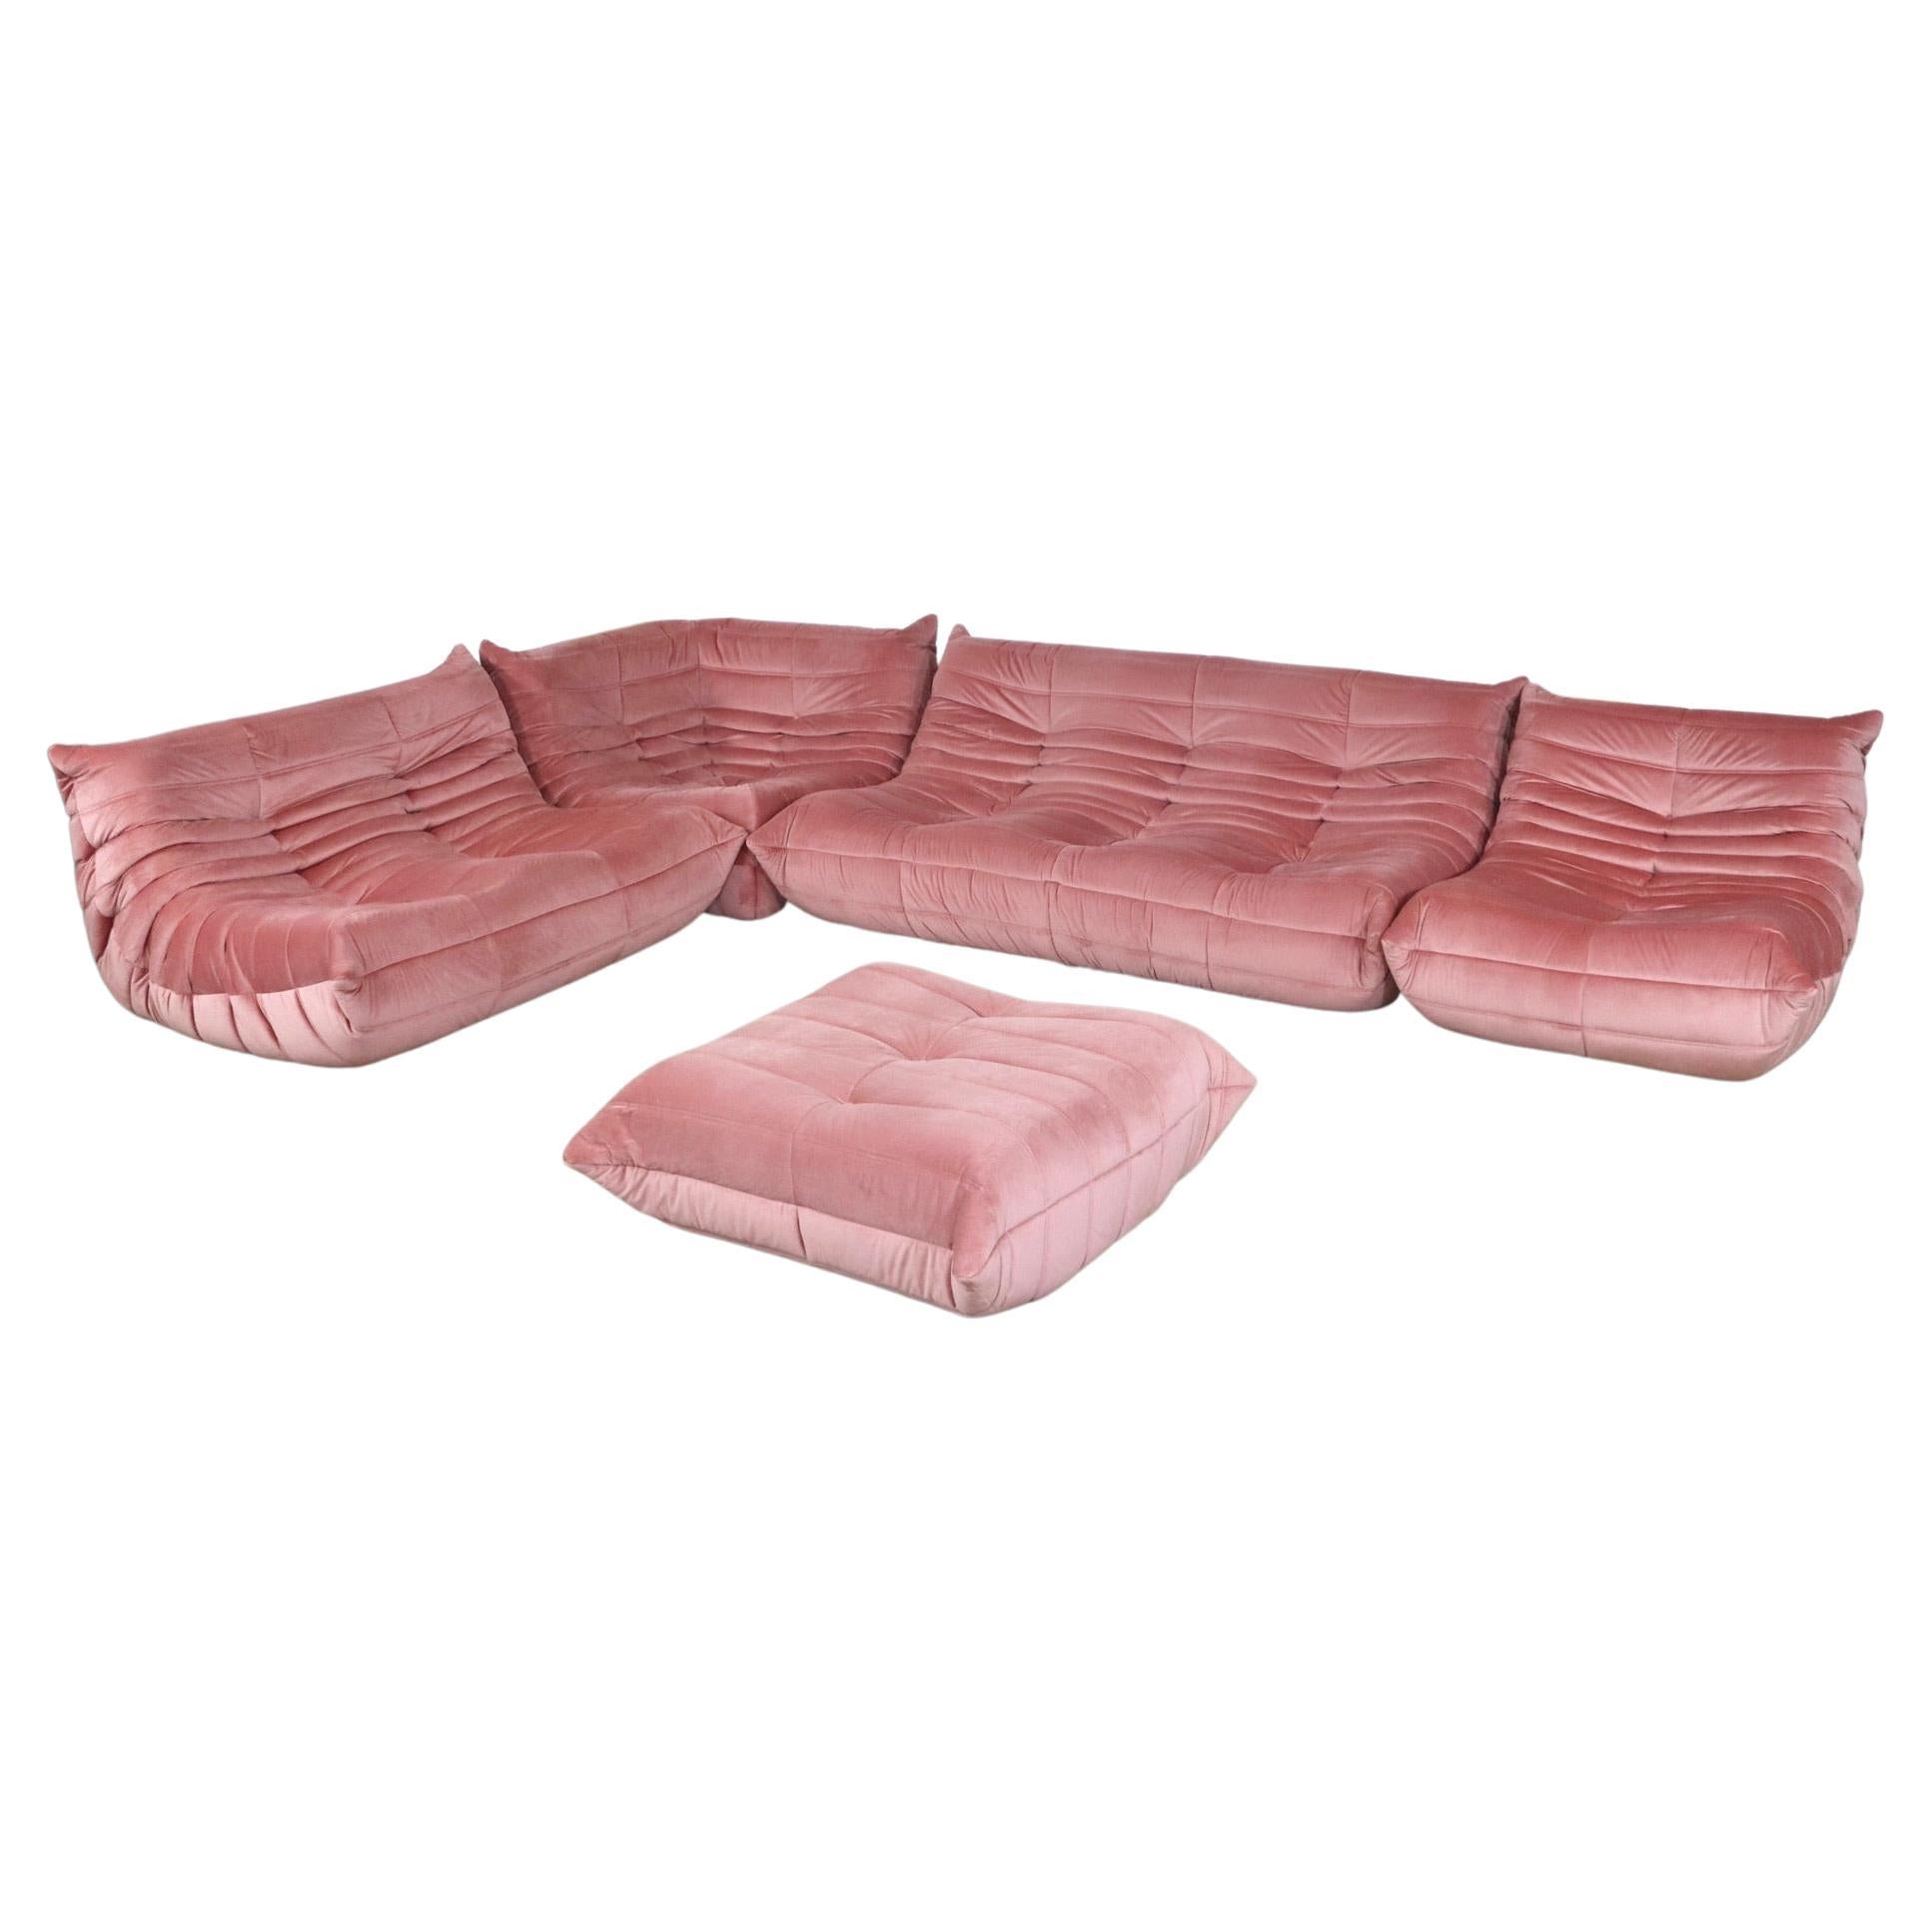 Original Ligne Roset Togo Seating Group in Pink Velvet by Michel Ducaroy